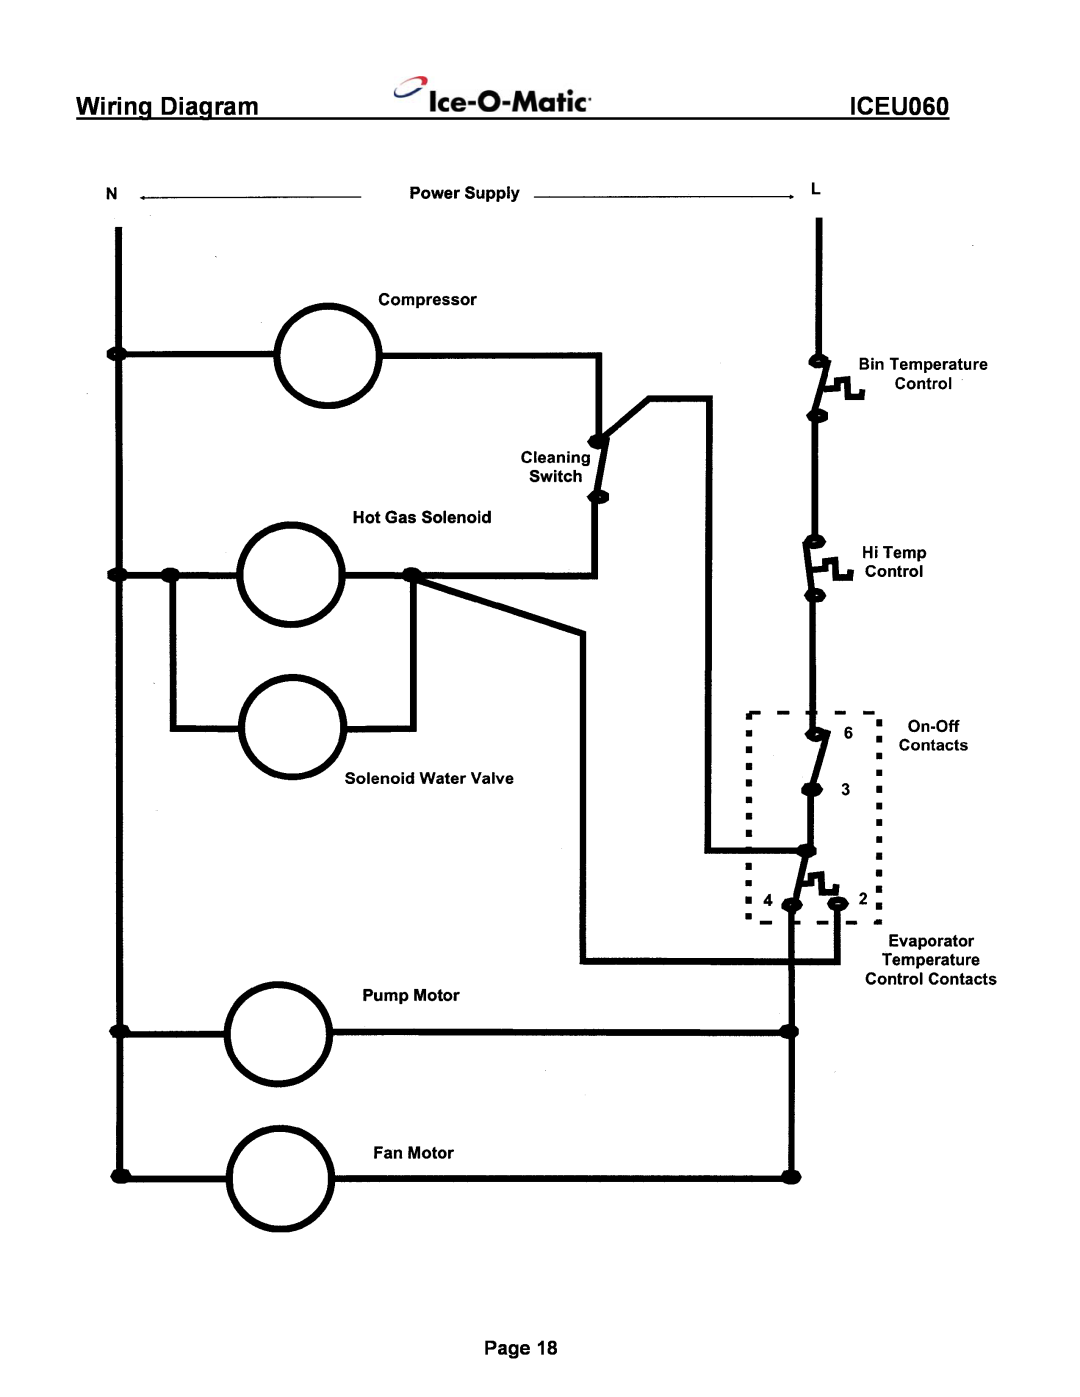 Ice-O-Matic ICEU060 installation manual Wiring Diagram, Page 